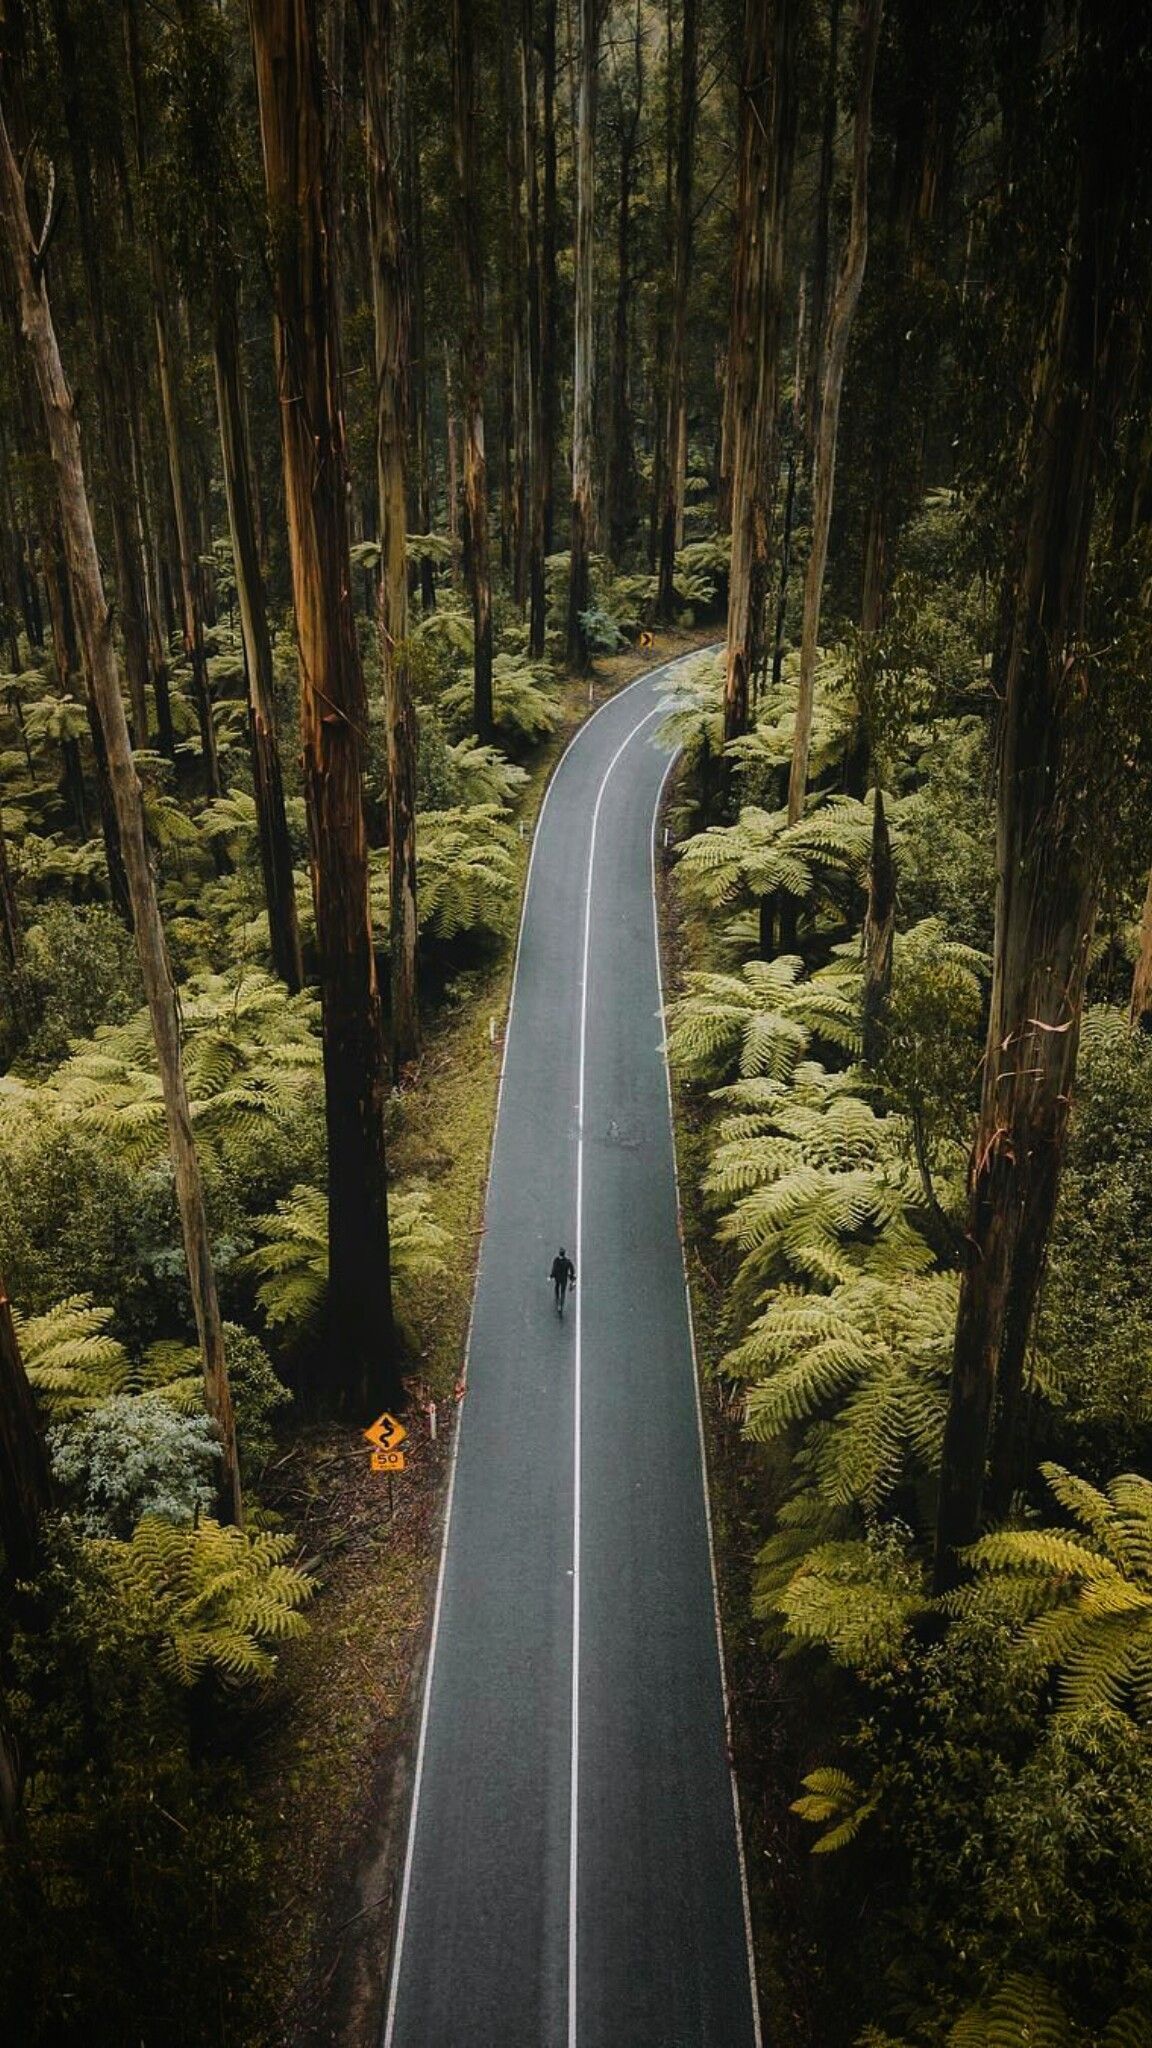 Drive among trees. Nature road.